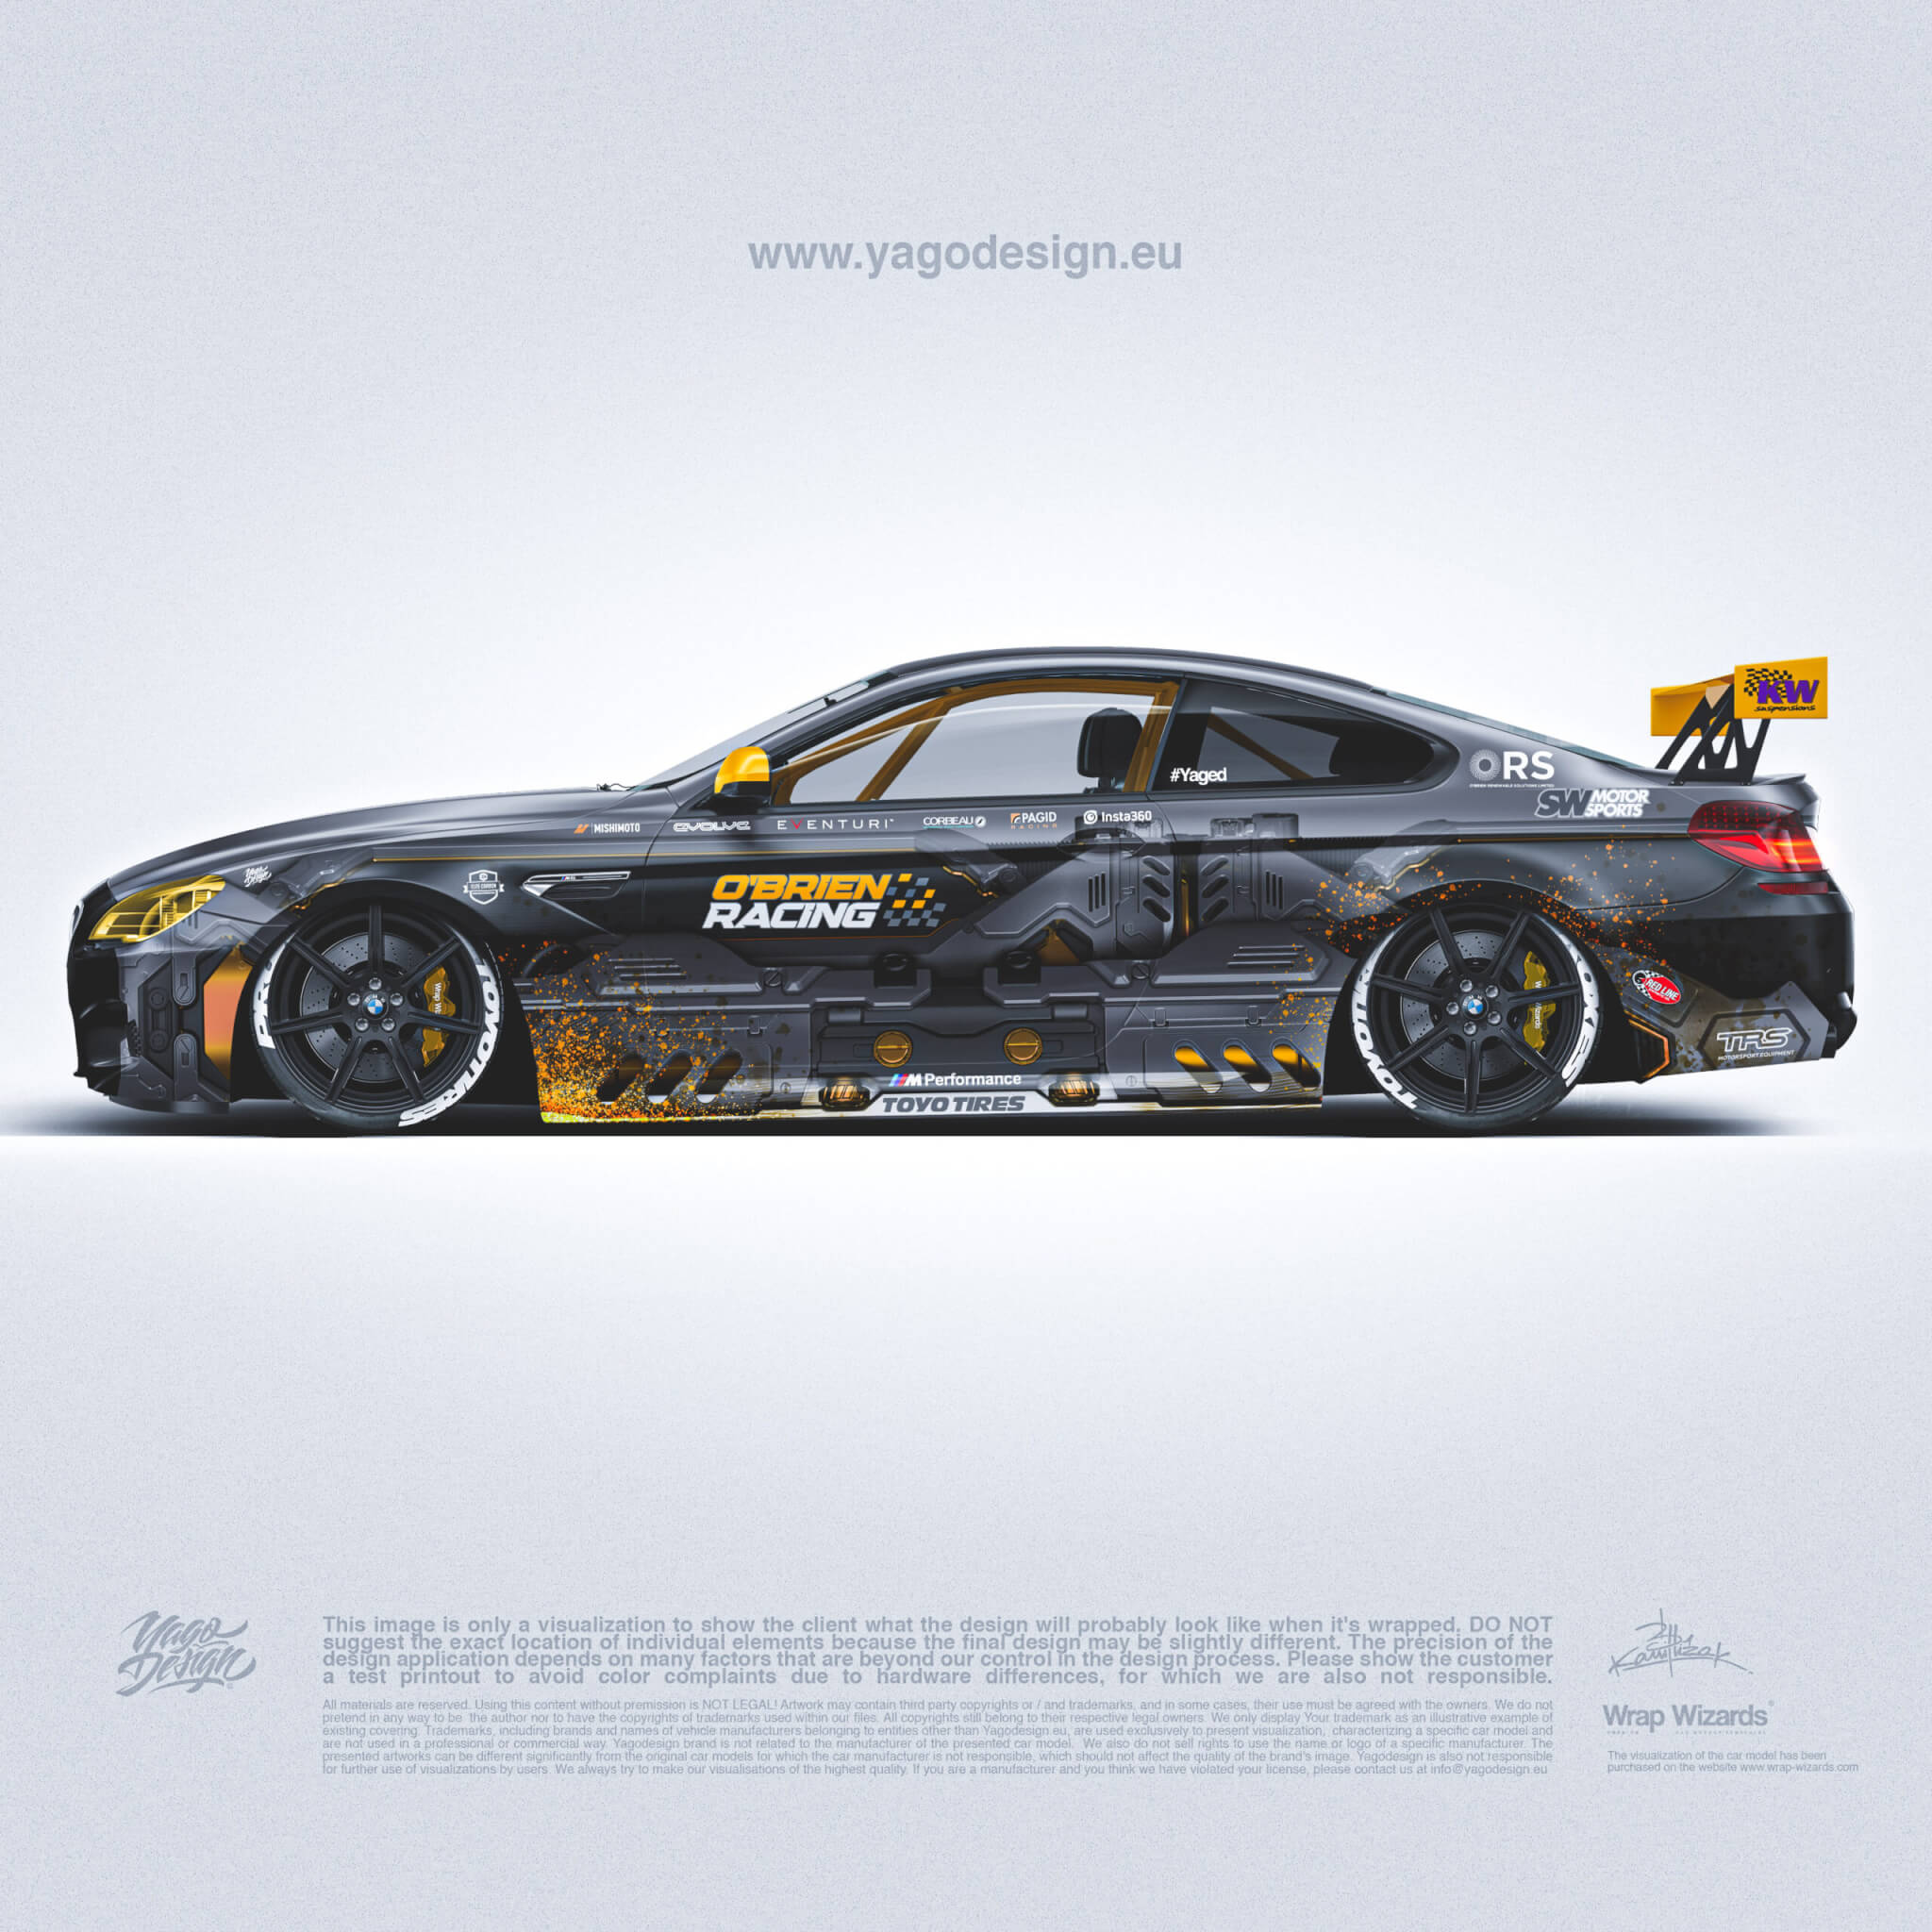 BMW M6 OSR RACING by Yagodesign